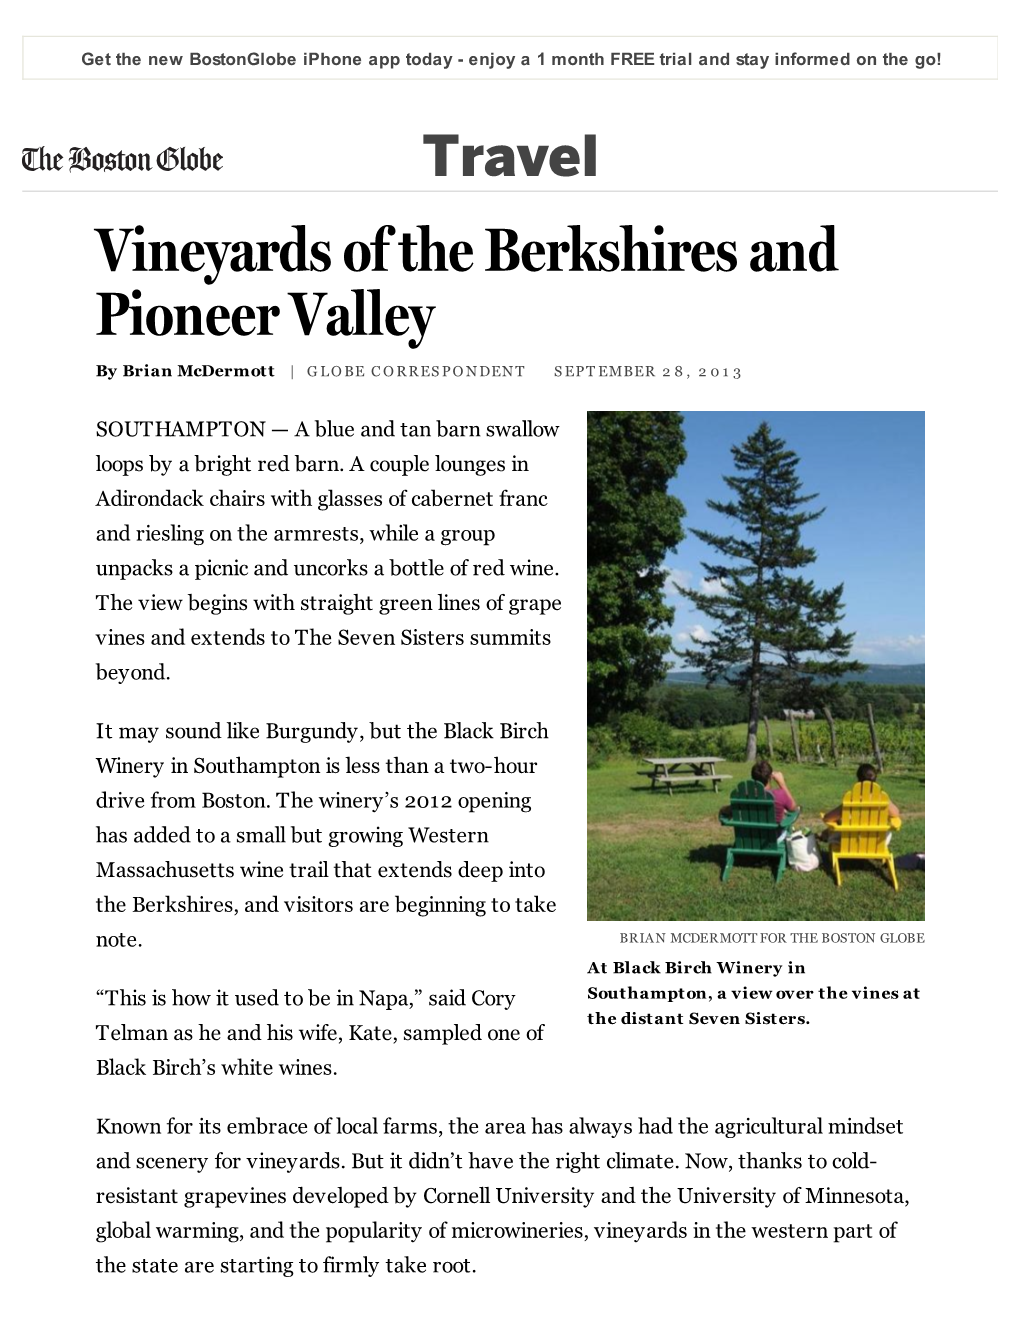 Vineyards of the Berkshires and Pioneer Valley